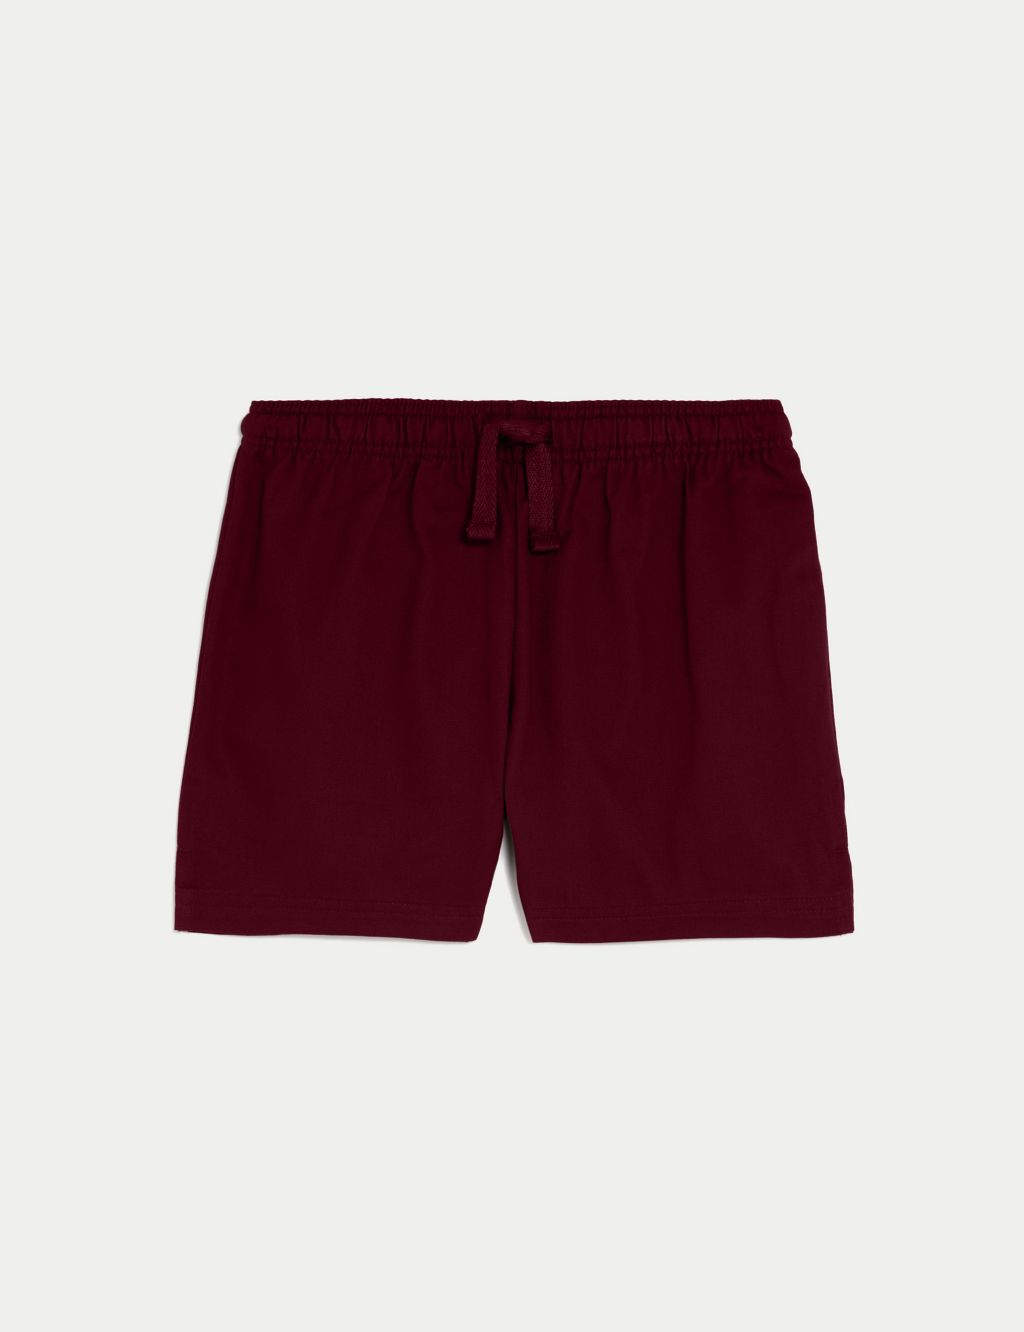 Unisex Pure Cotton Sports Shorts (2-16 Yrs) image 2